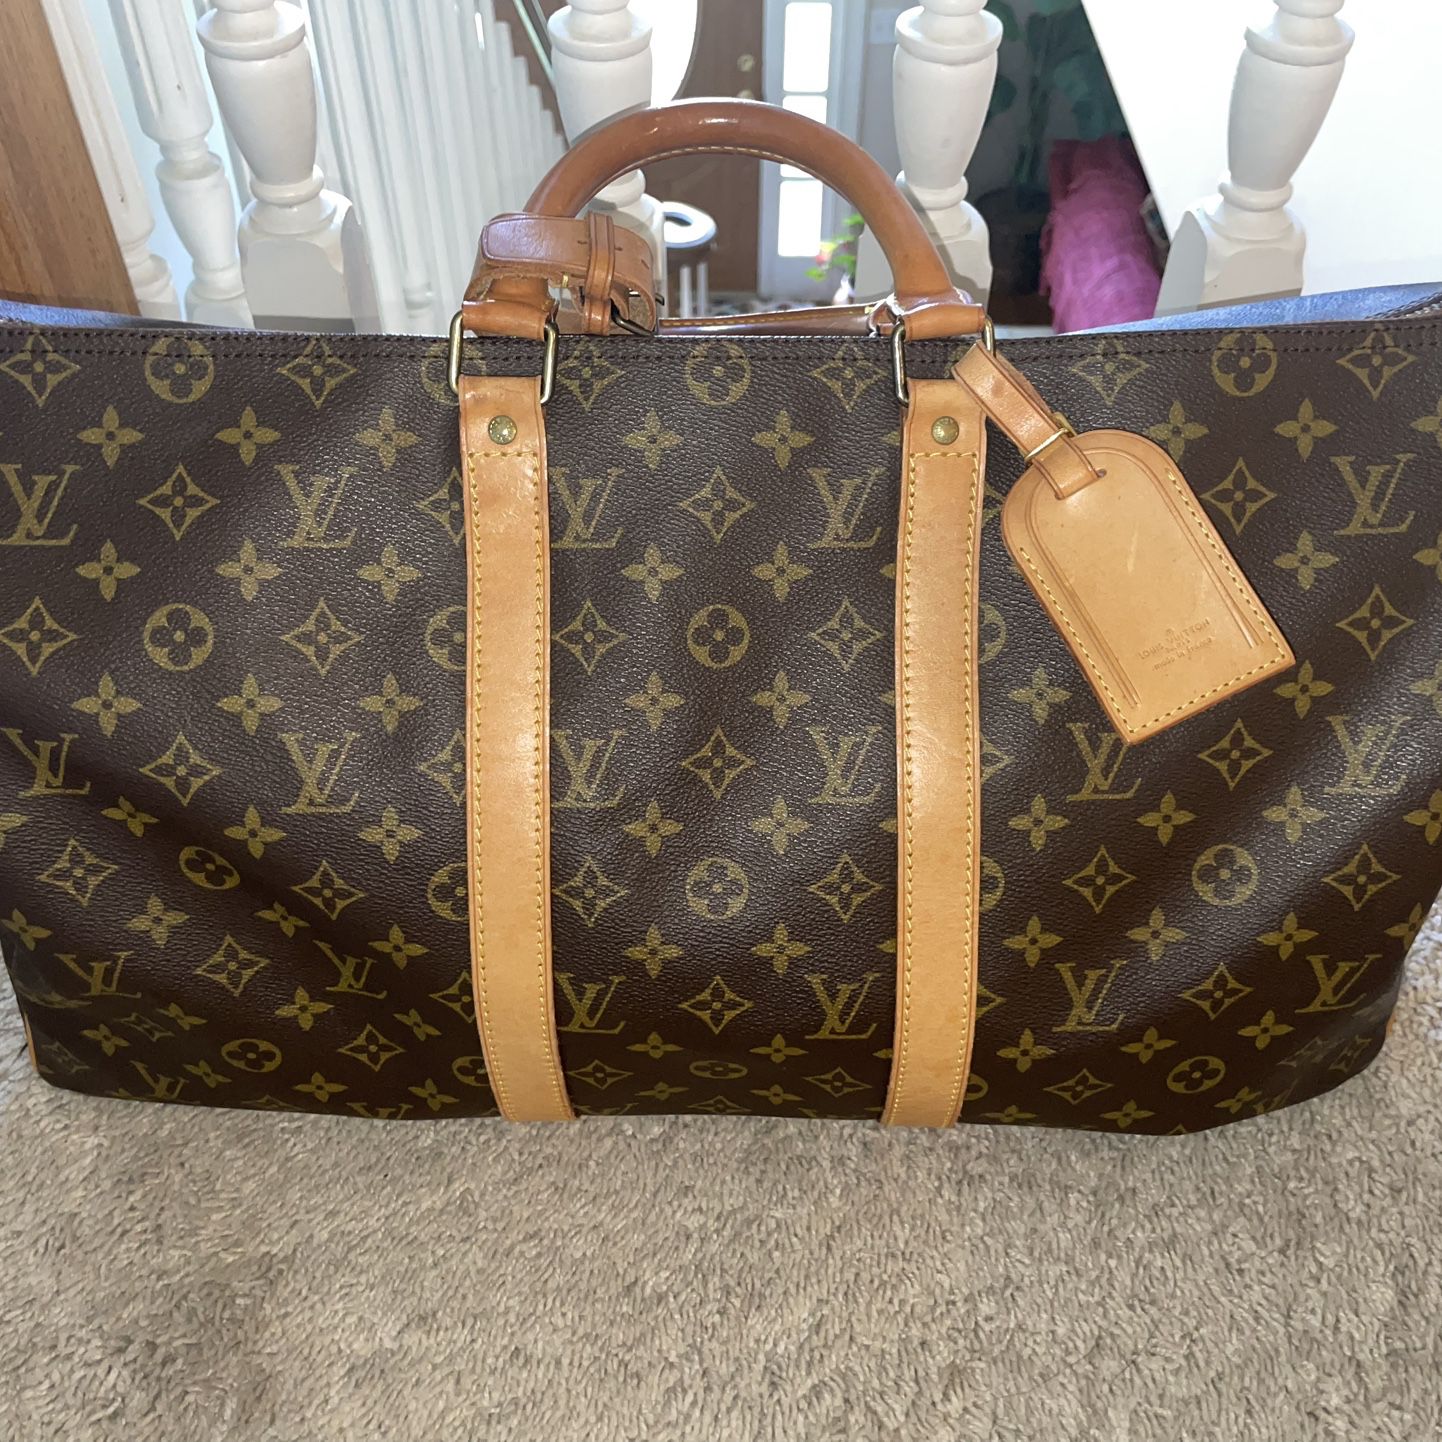 Louis Vuitton Duffle Bag for Sale in Marietta, GA - OfferUp